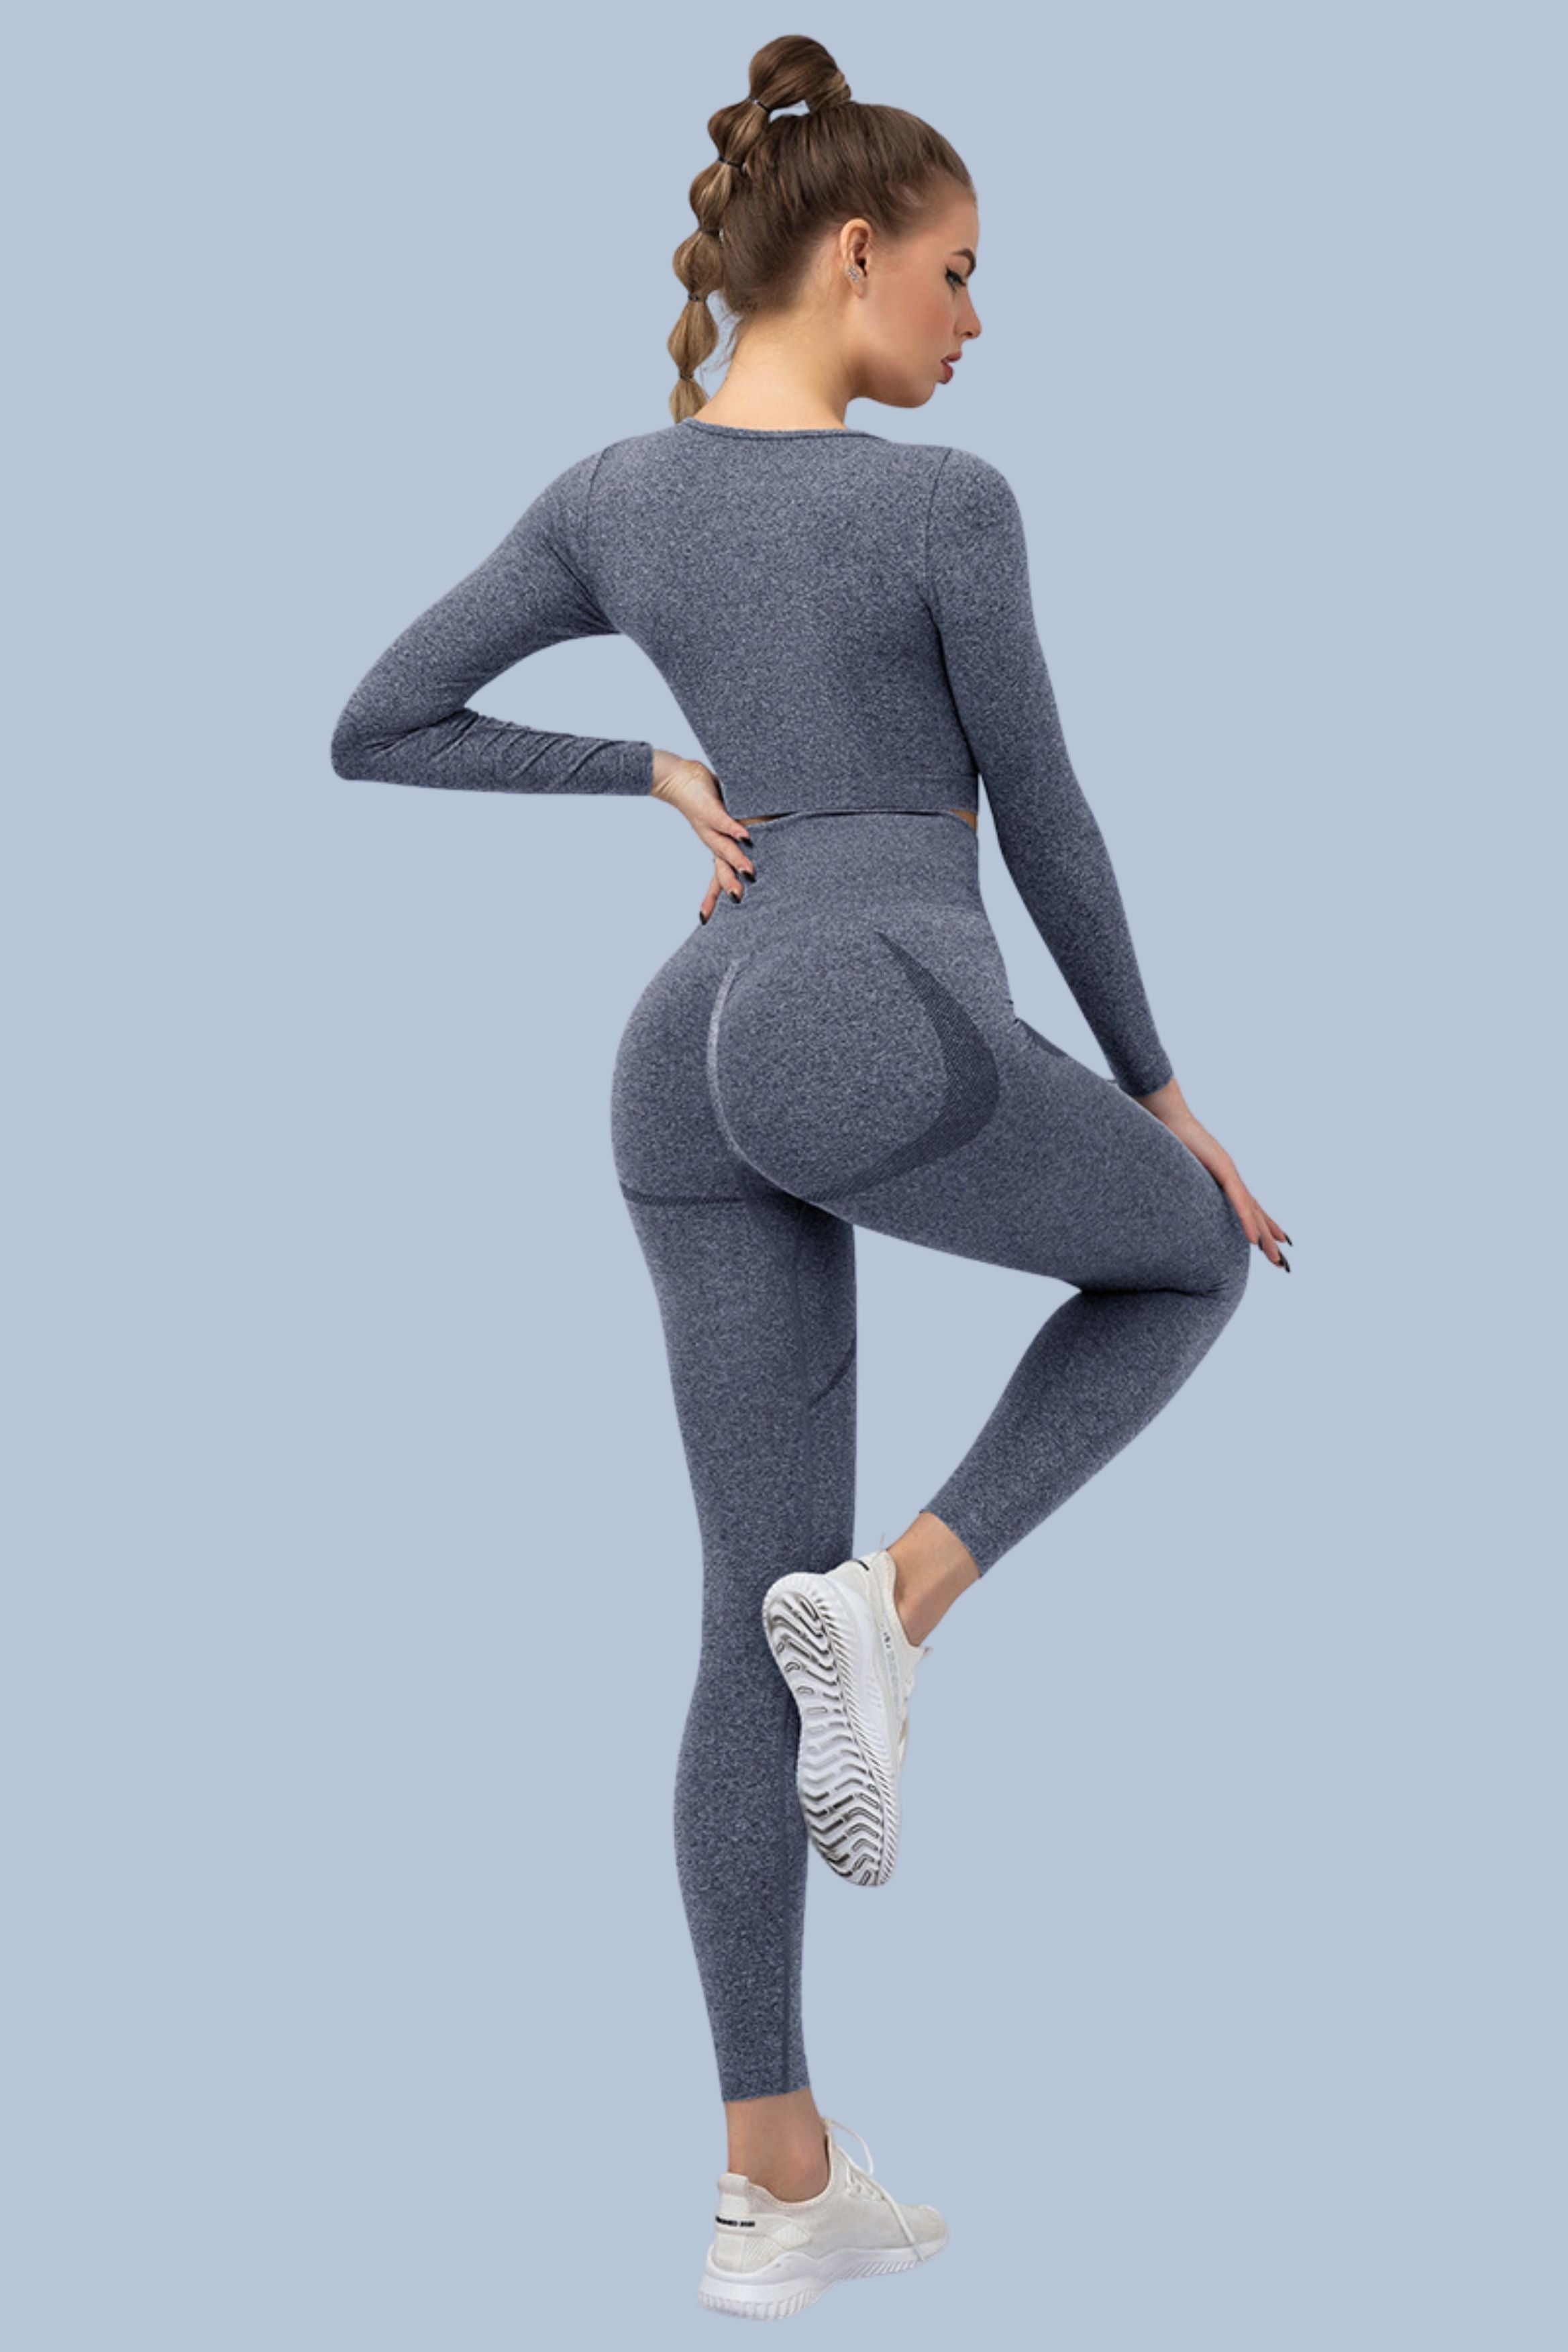 Generic Workout Suit, High Waist Yoga Leggings Sets, Women